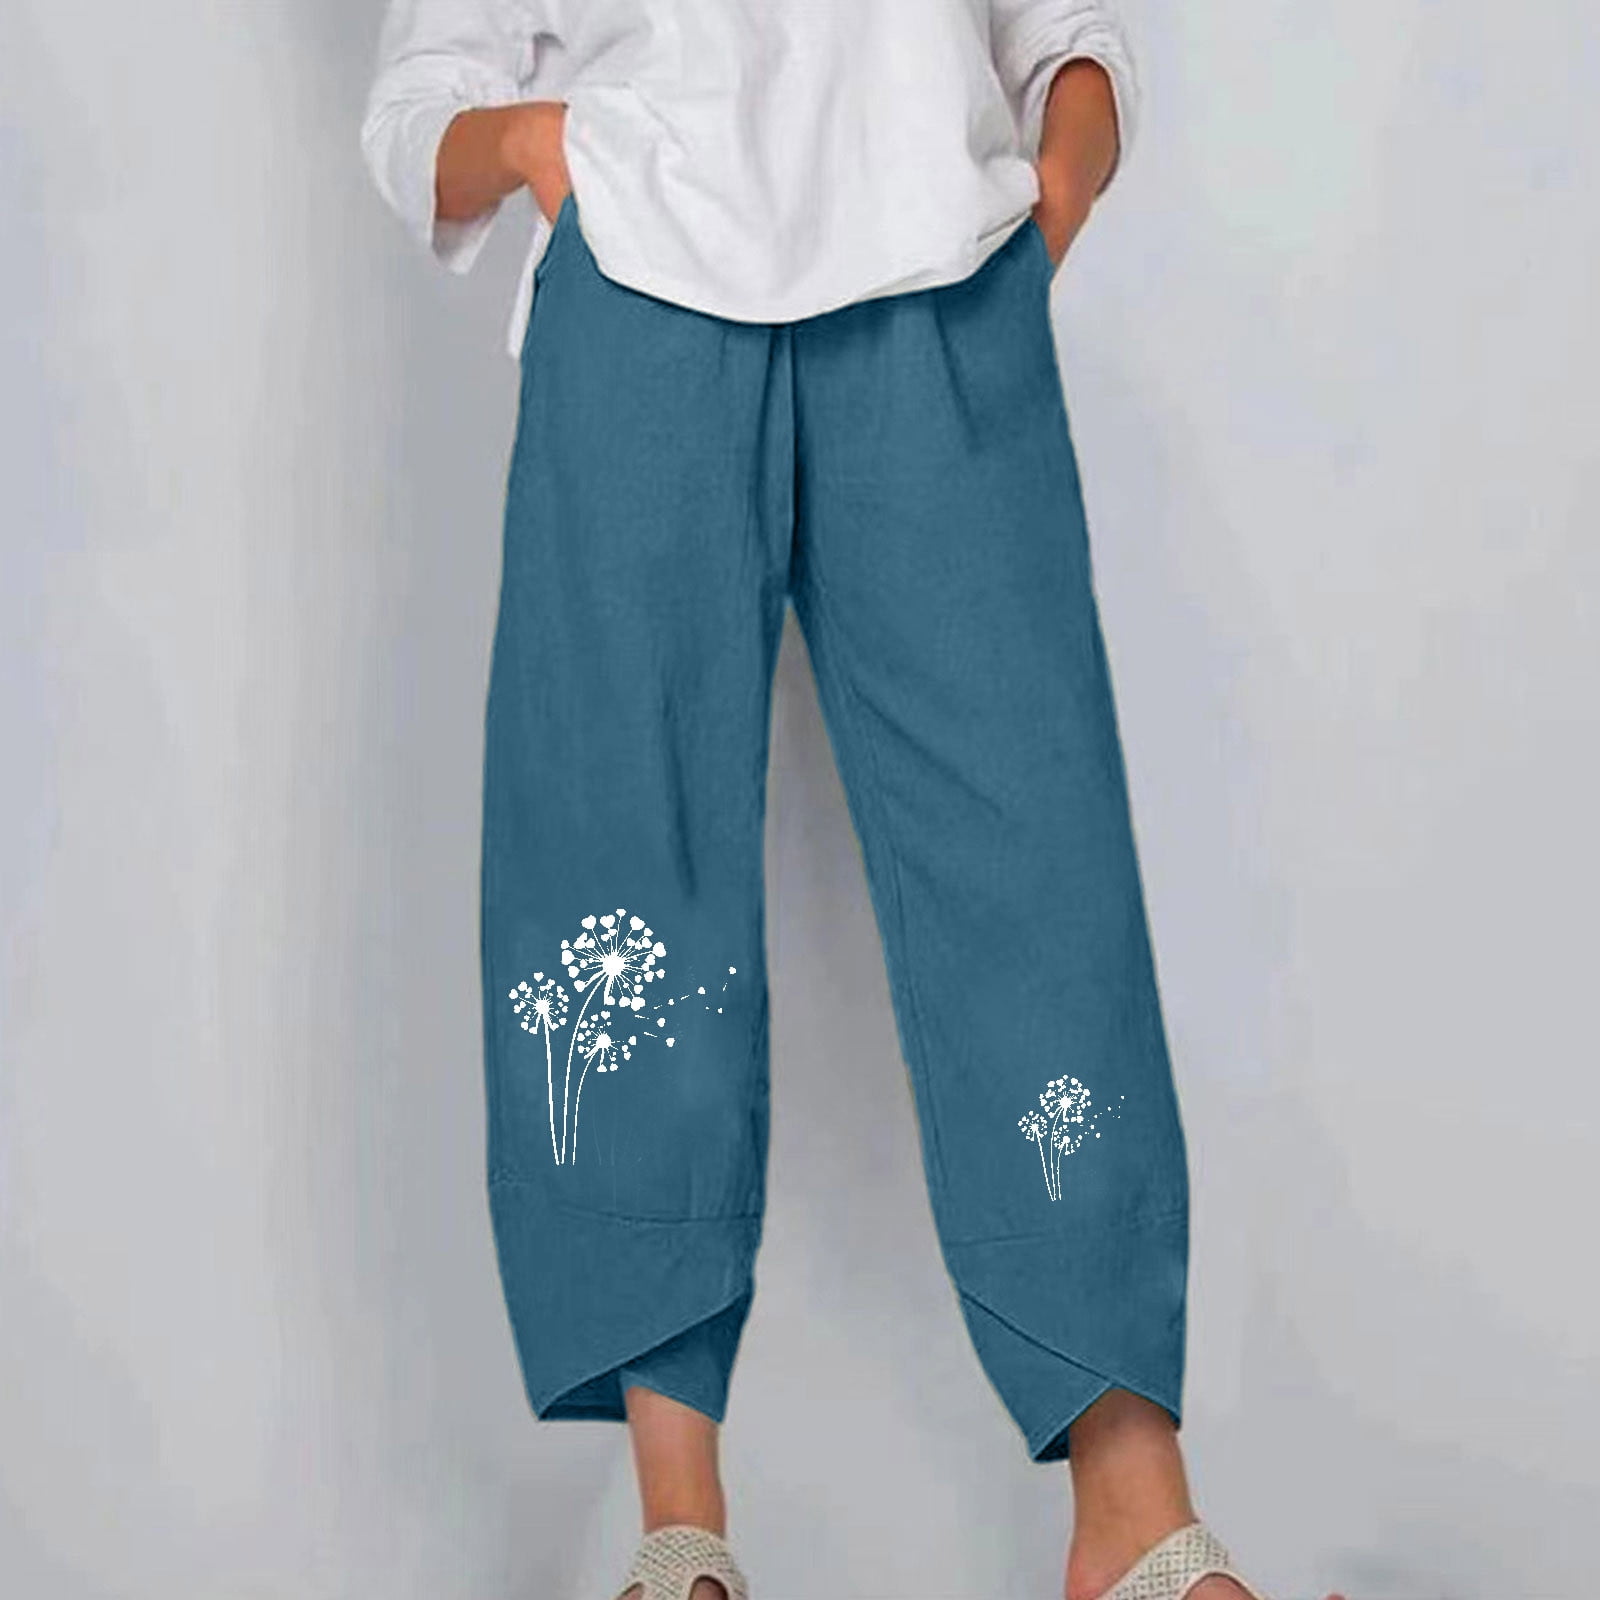 Cotton Linen Pants for Women Elastic Waist Baggy Tulip Pants Trendy ...